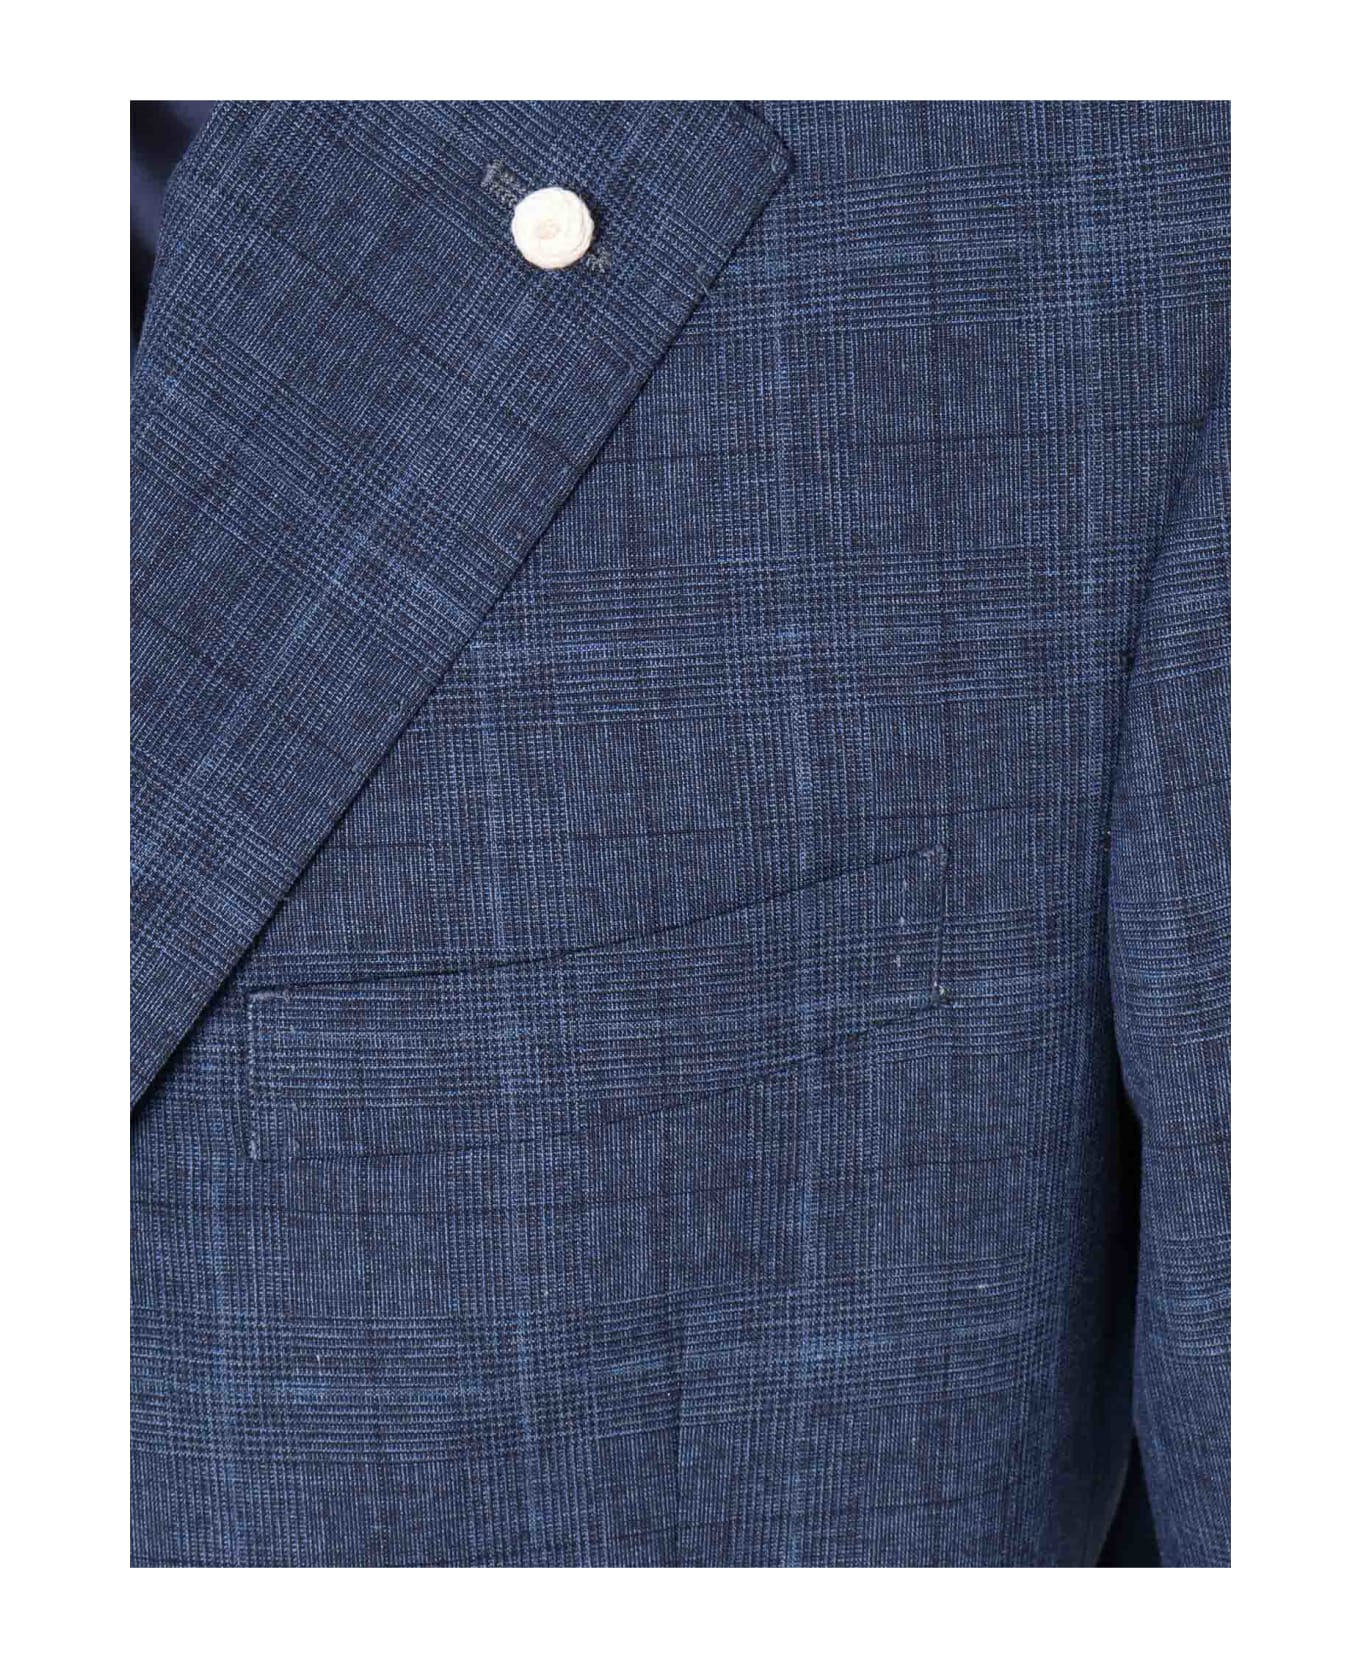 Luigi Bianchi Mantova Blue Pinstripe Suit - BLUE